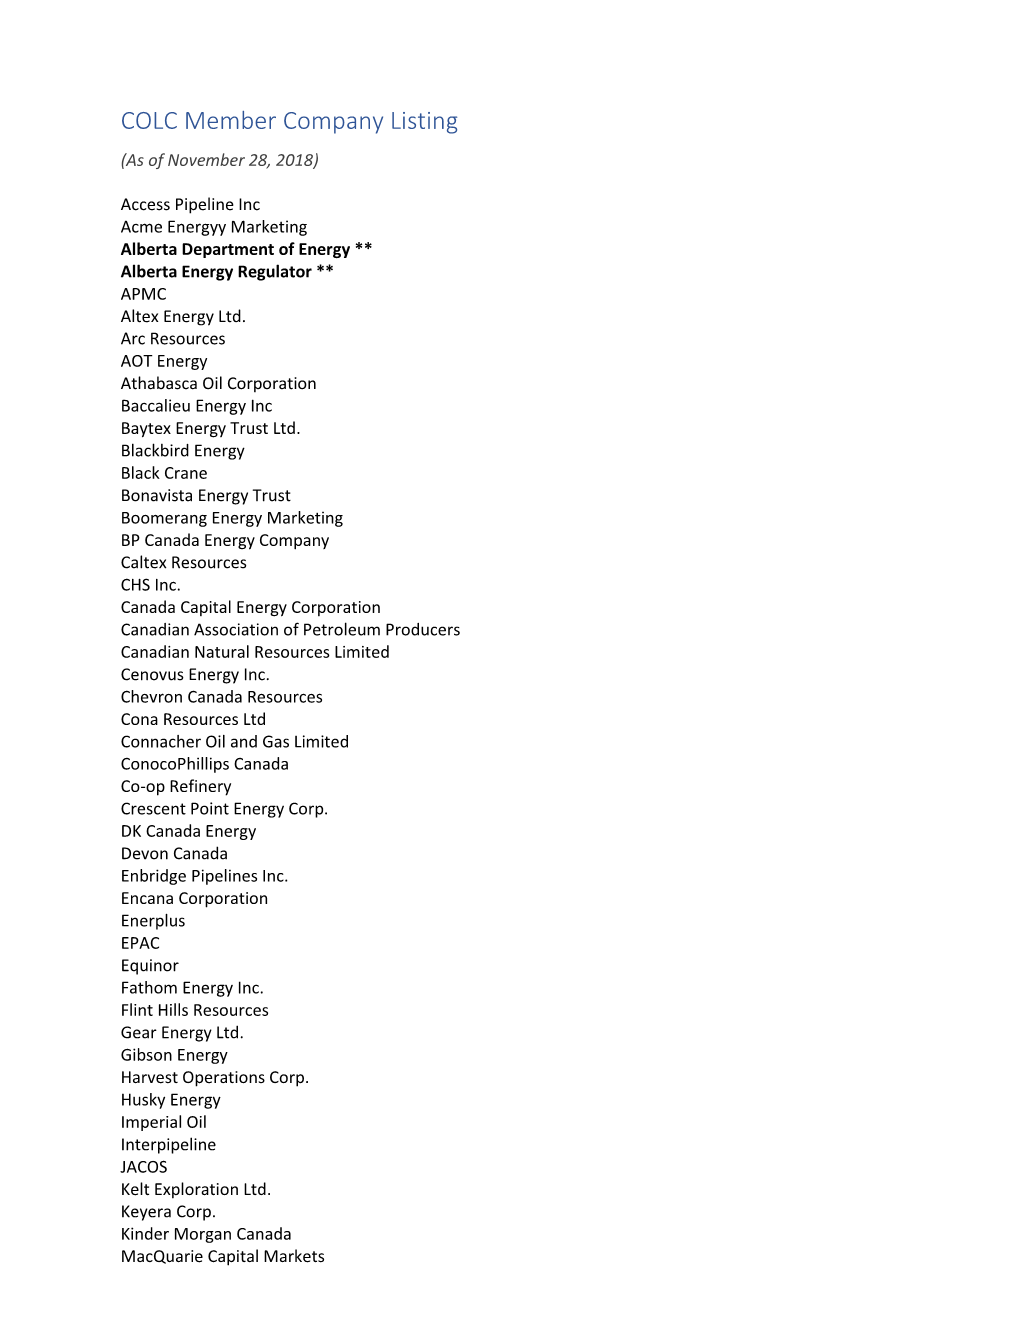 COLC Member Company Listing (As of November 28, 2018)